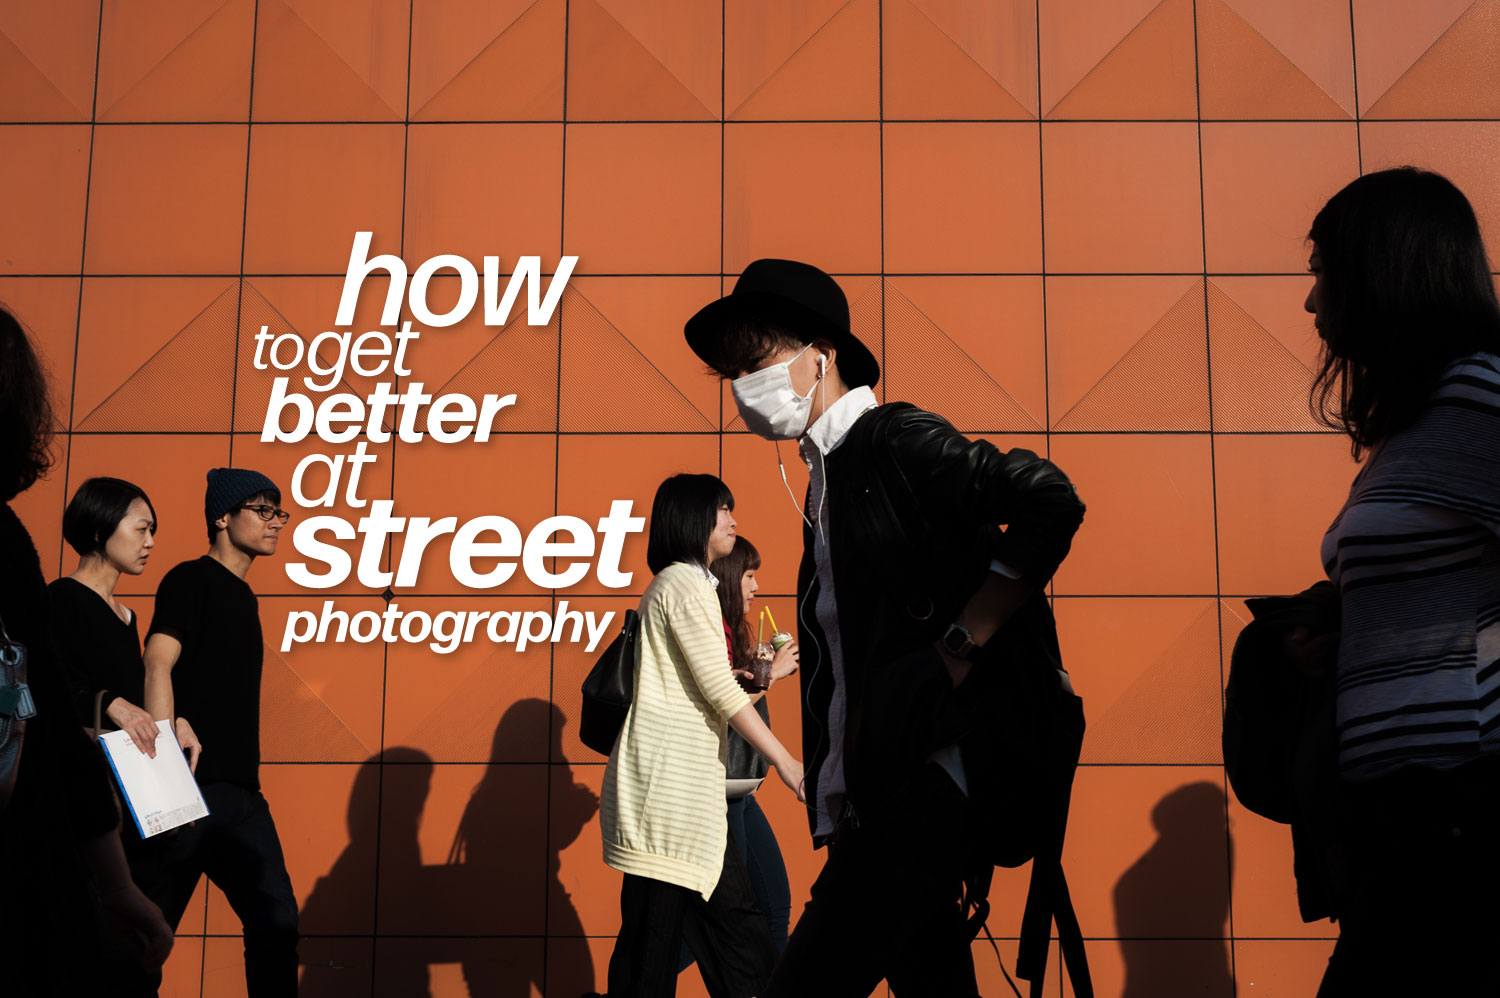 https://images.squarespace-cdn.com/content/v1/58a5d2df46c3c4b348c552a5/1559116378804-QPGCGBREOBG85TTMGFB1/how-to-get-better-street-photography-0.jpg